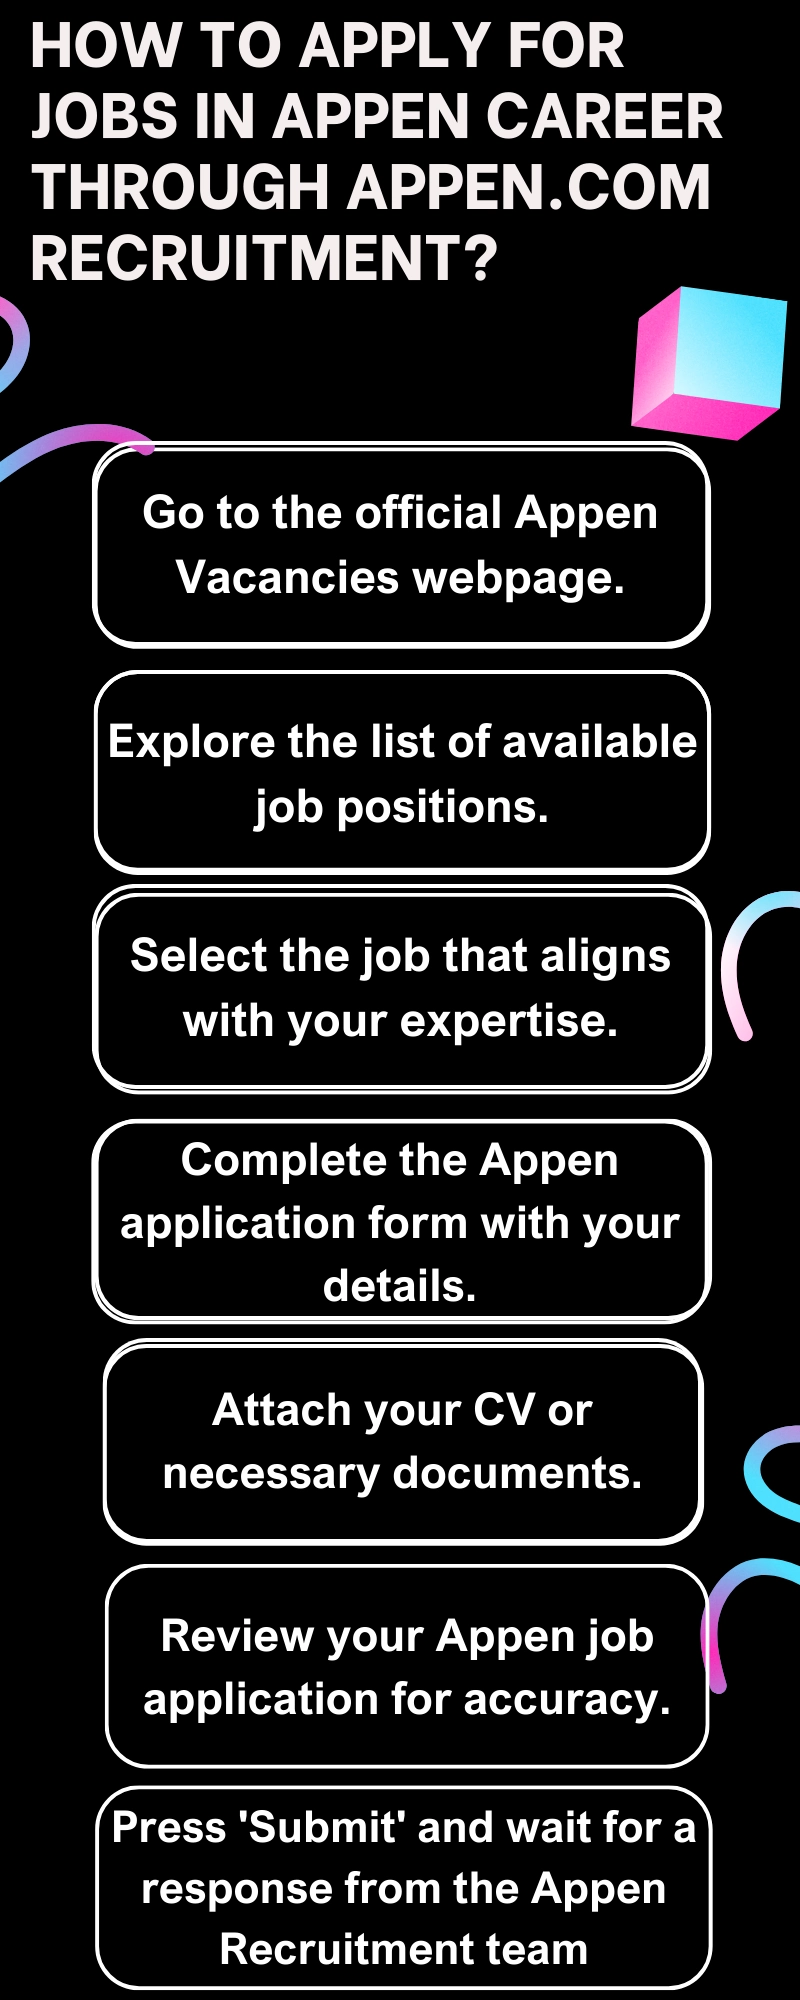 How to Apply for Jobs in Appen Career through appen.com recruitment?